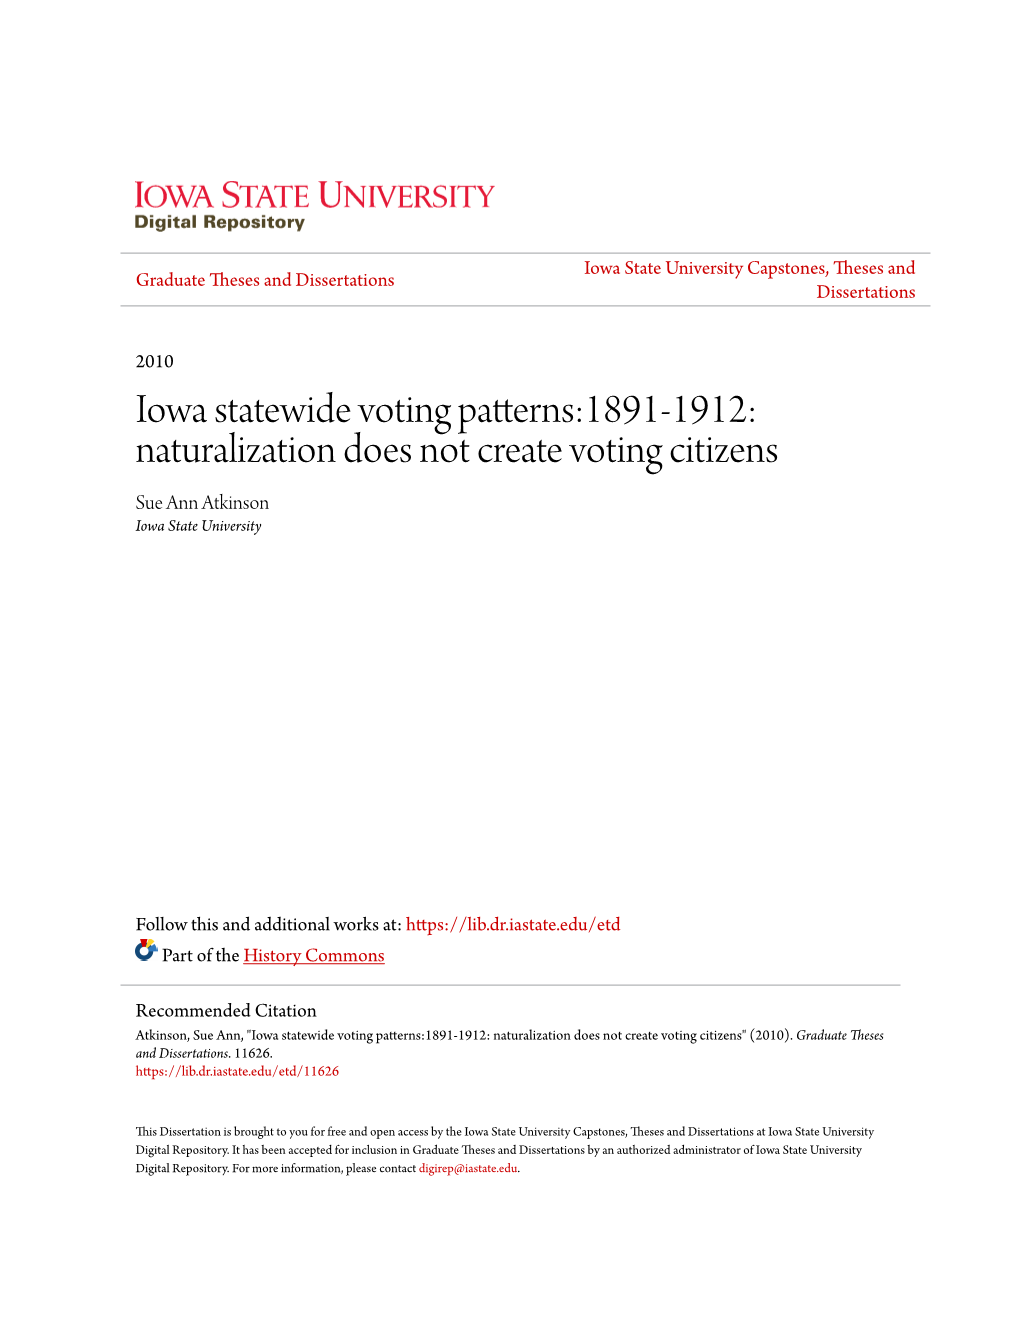 Iowa Statewide Voting Patterns:1891-1912: Naturalization Does Not Create Voting Citizens Sue Ann Atkinson Iowa State University